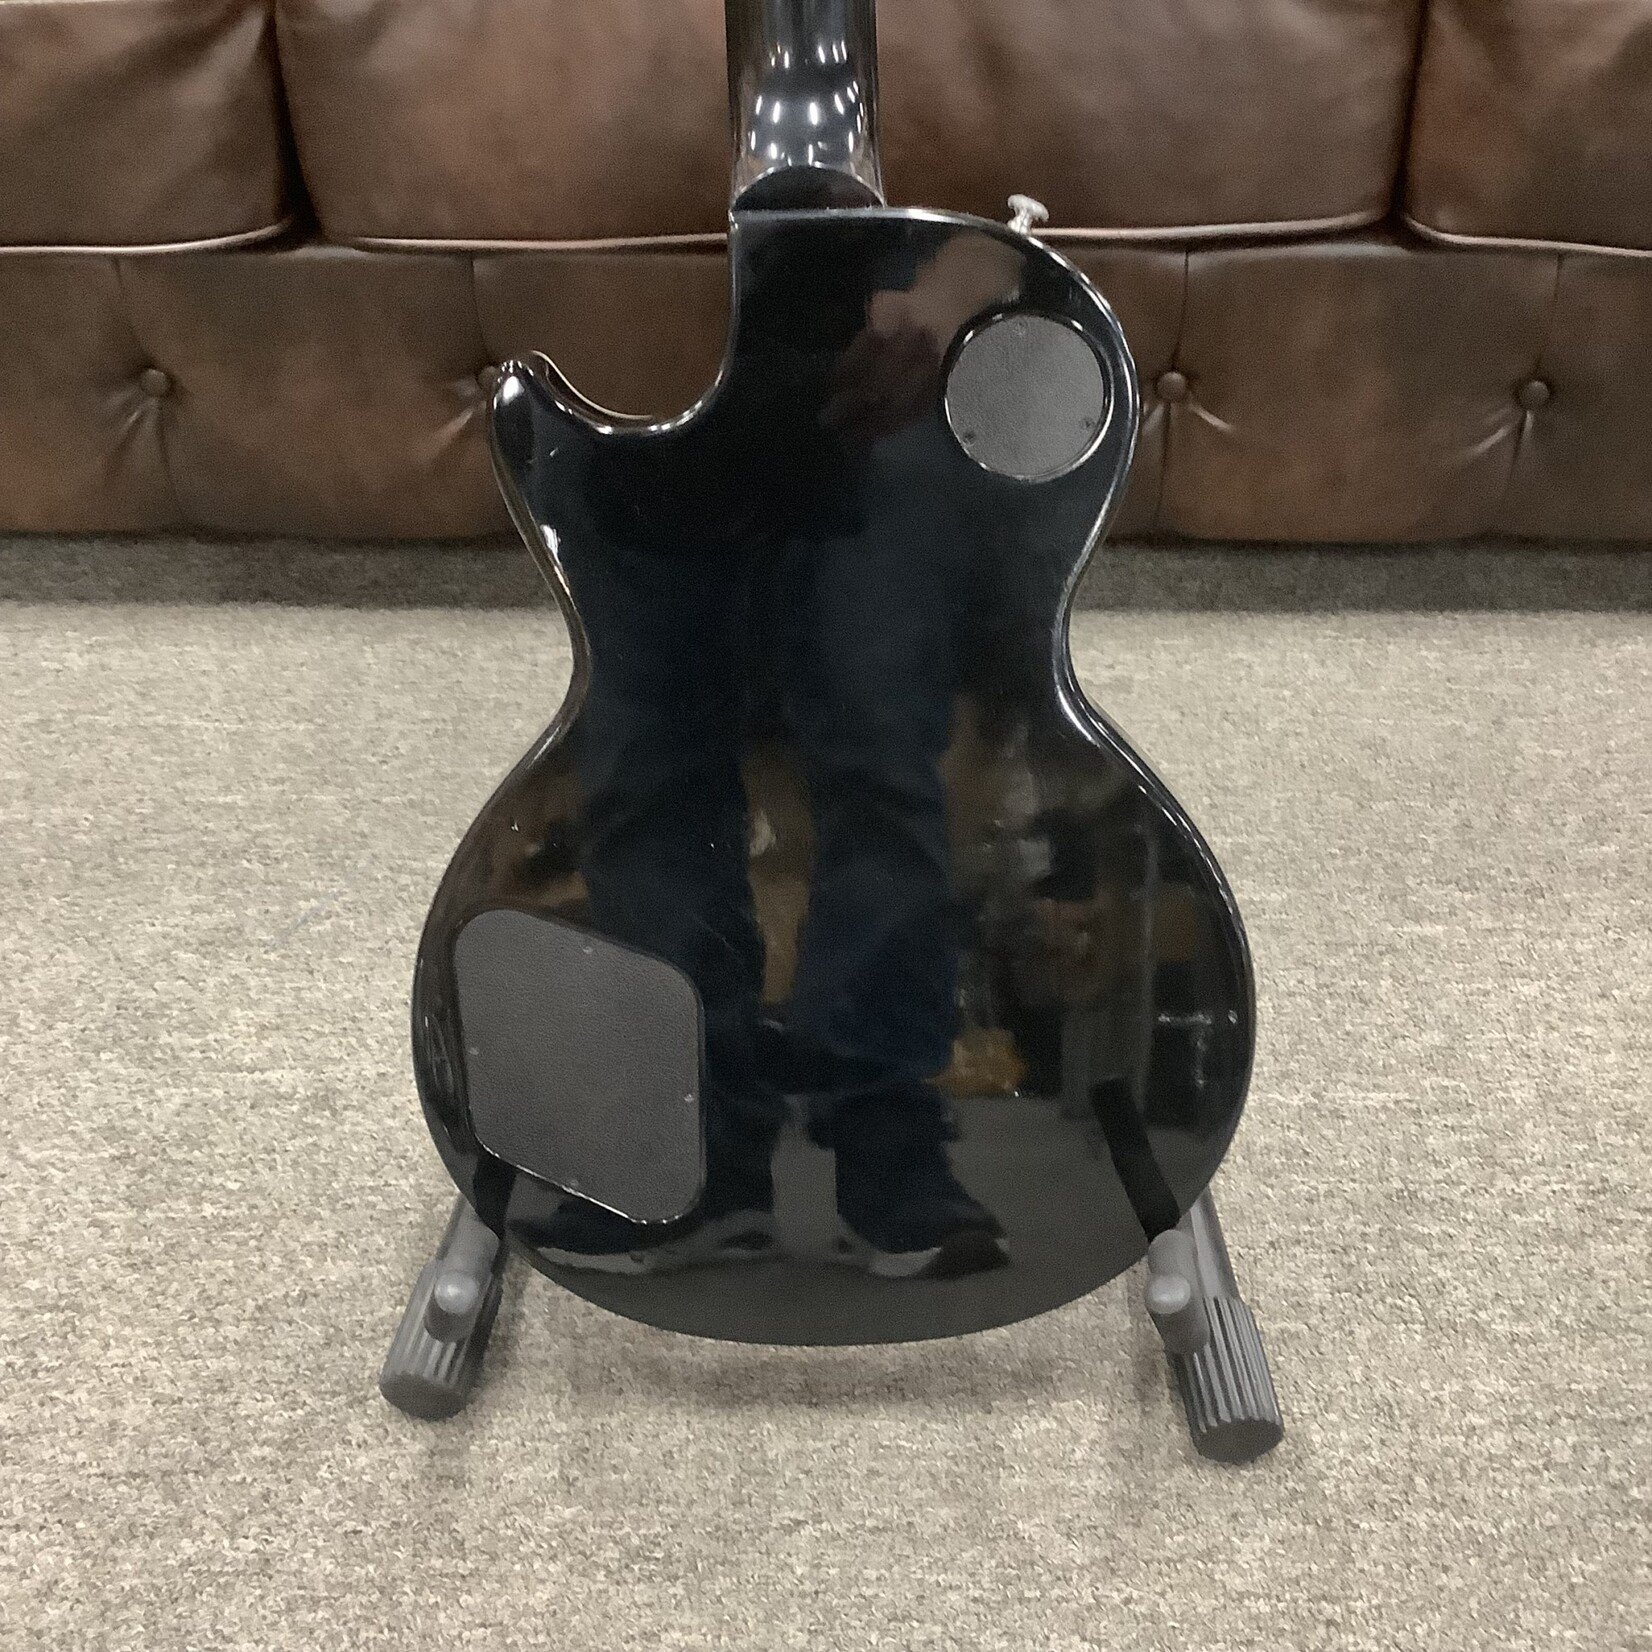 Gibson 2018 Gibson Les Paul Classic Black